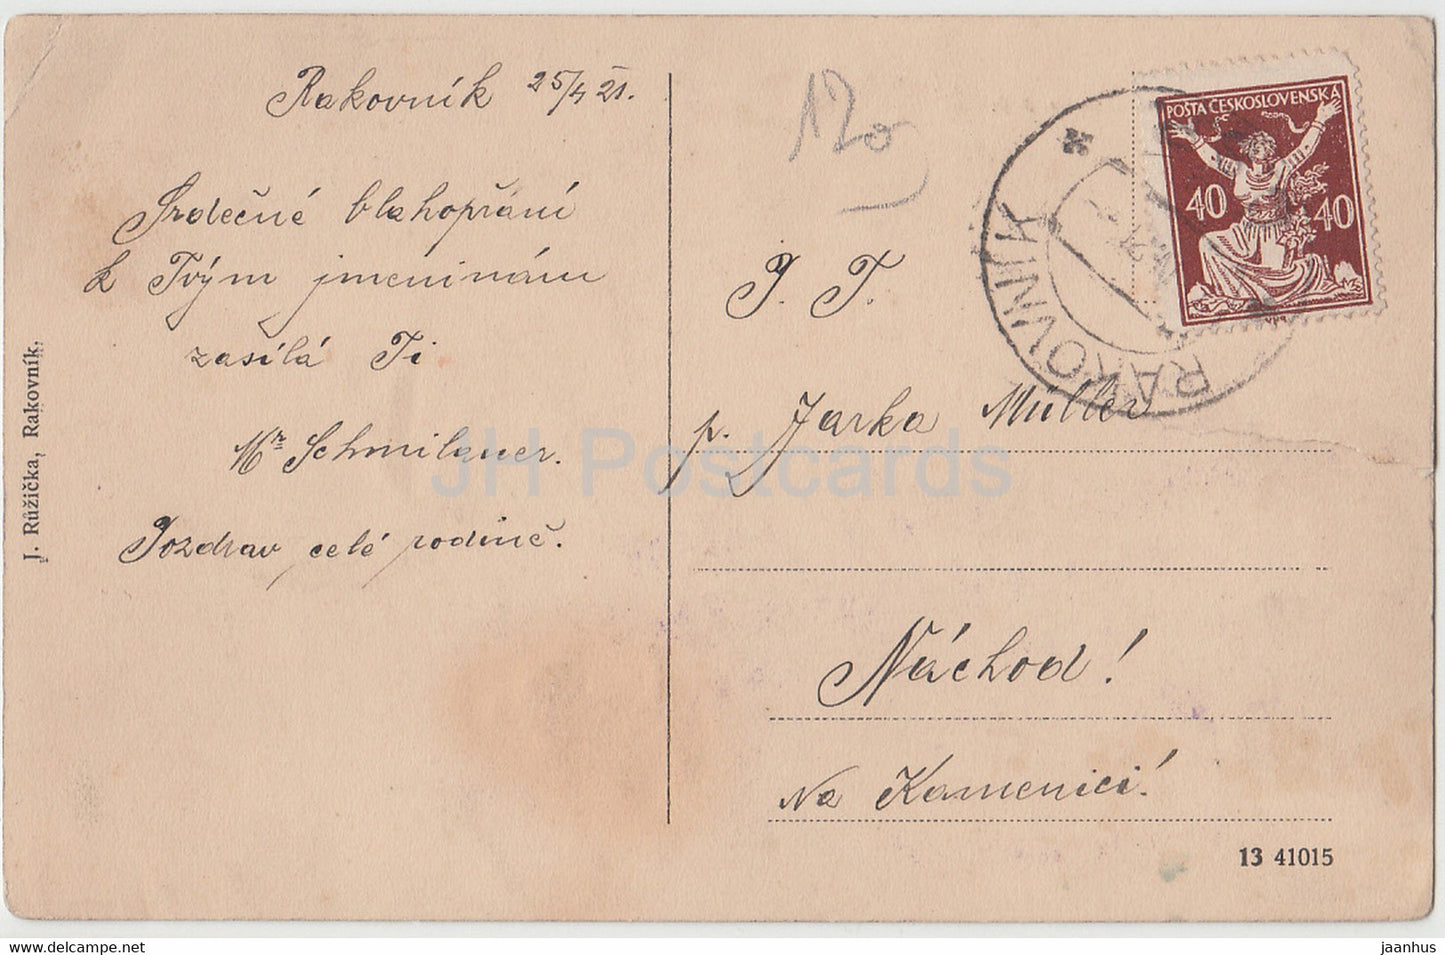 Rakovnik - Kostelicek sv Jilji - Kirche - alte Postkarte - 1921 - Tschechische Republik - Tschechoslowakei - gebraucht